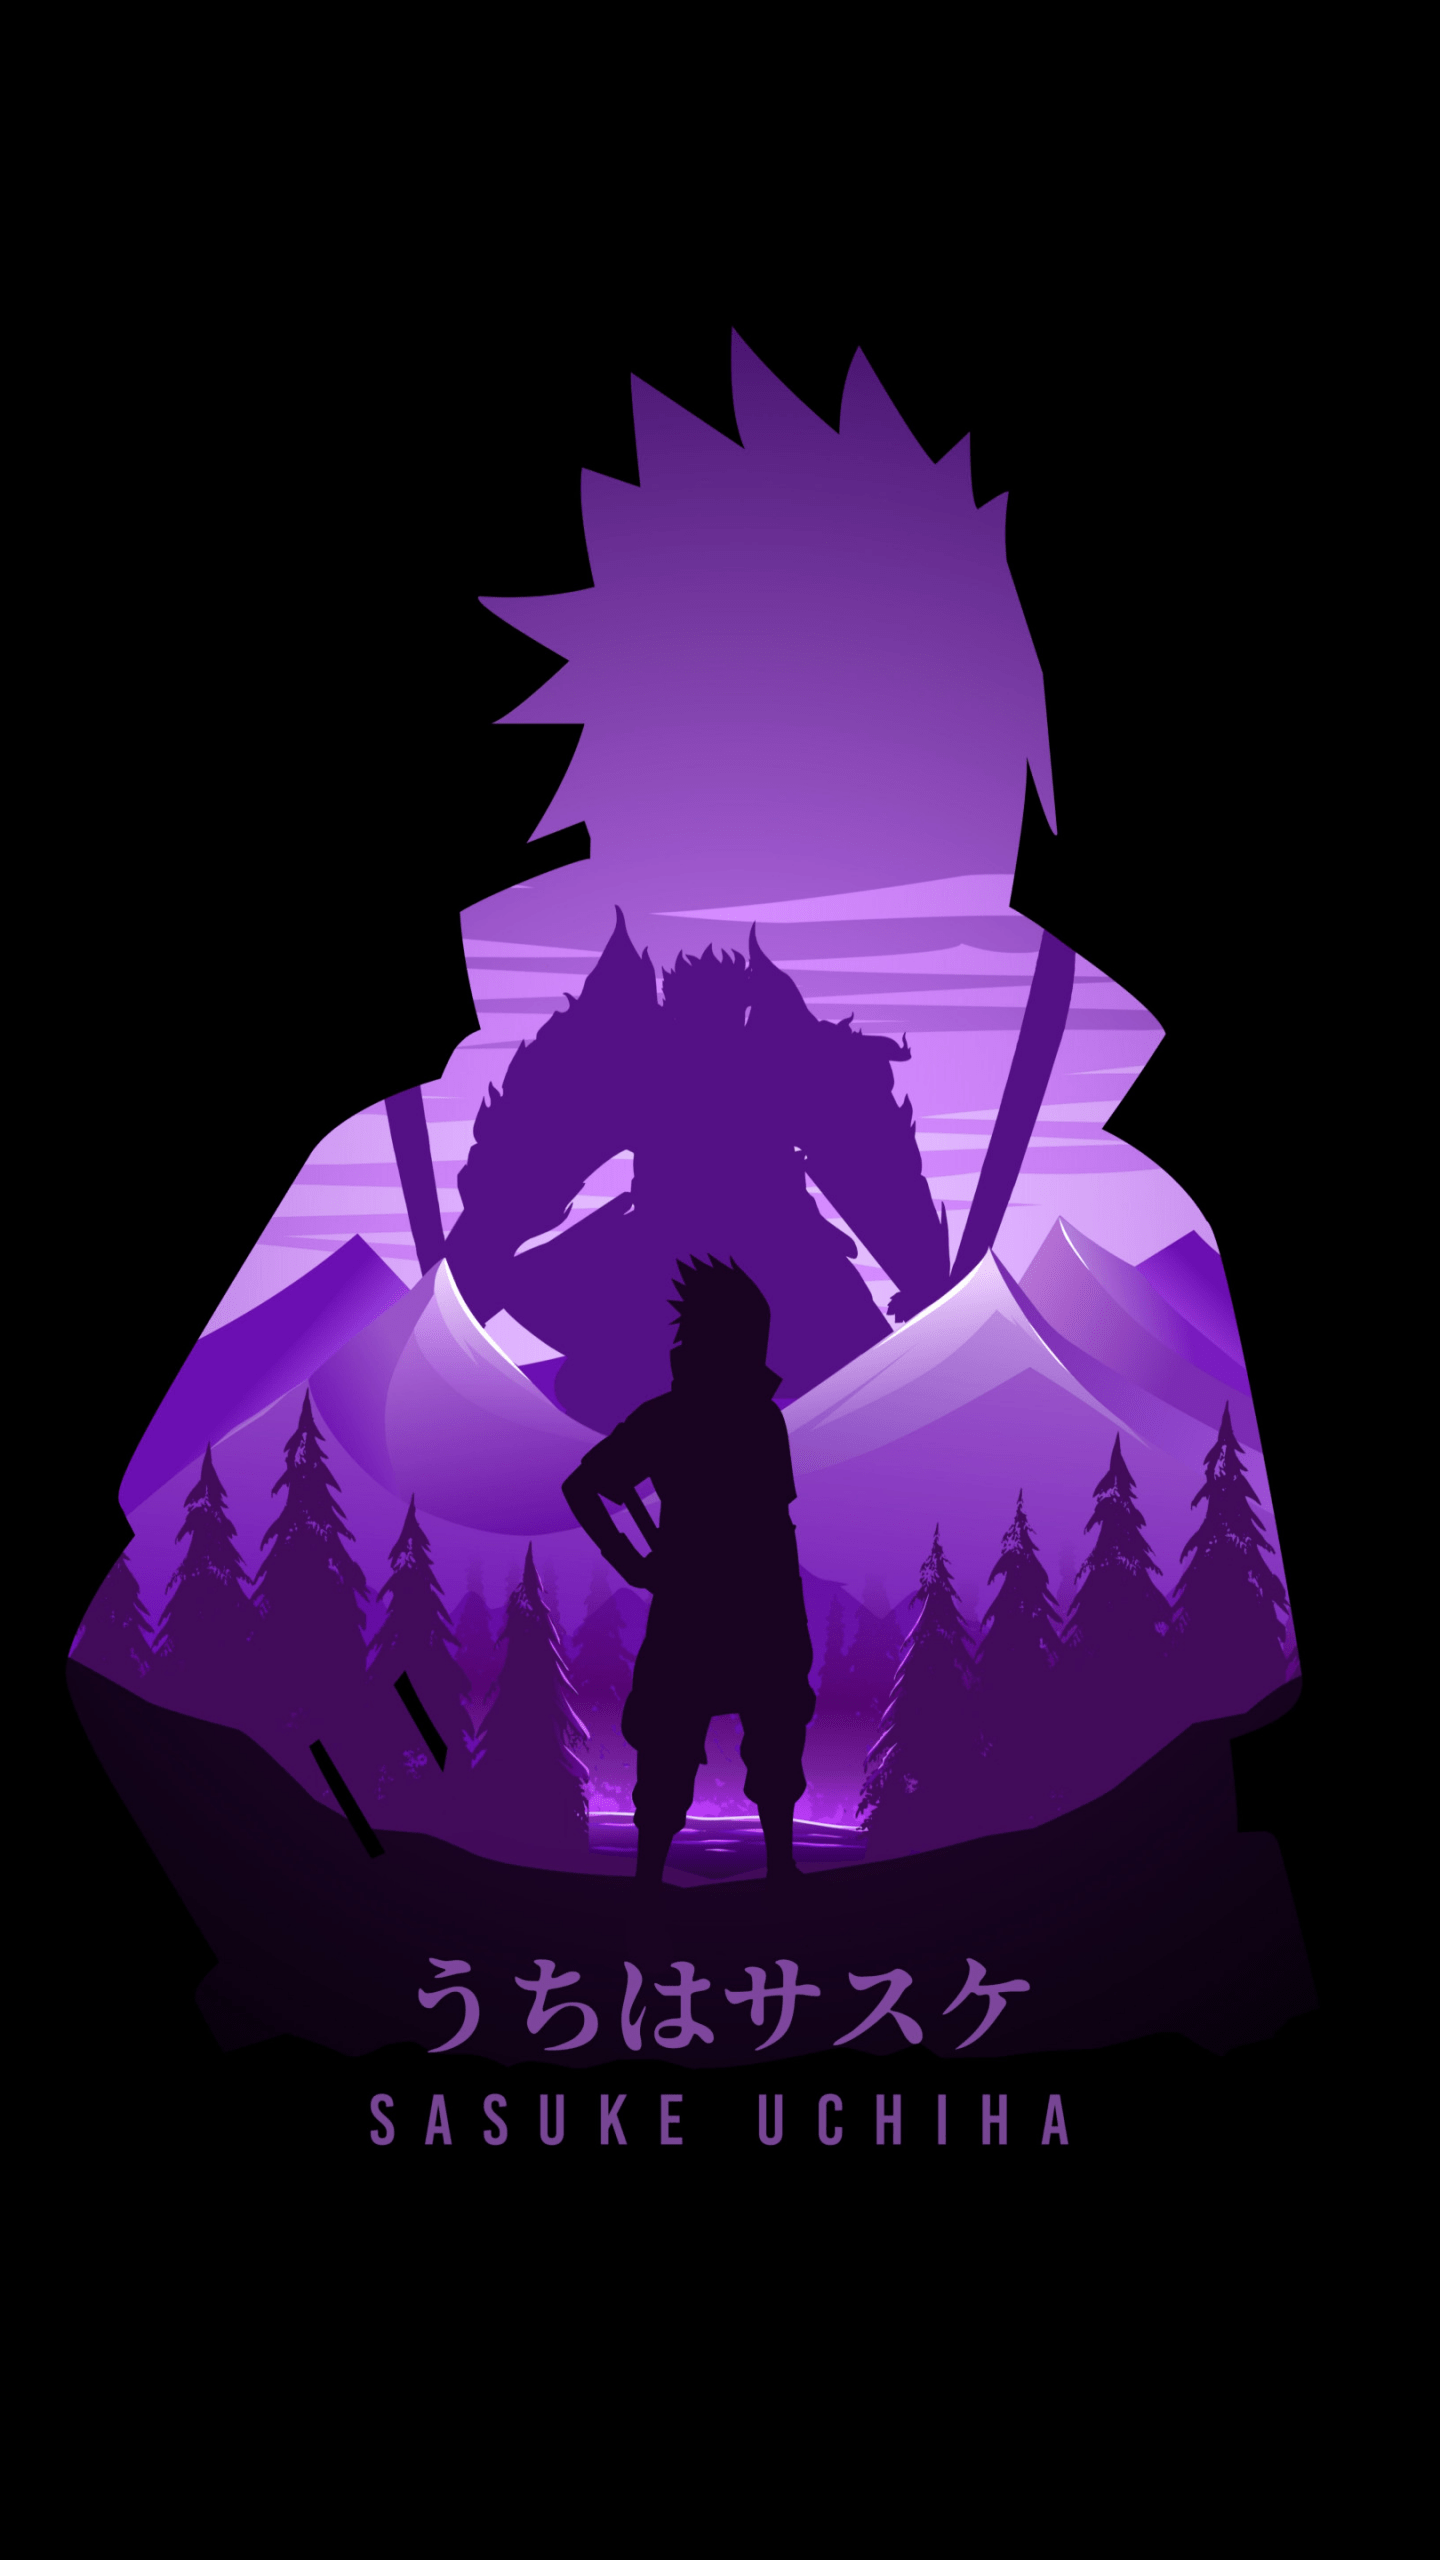 An image of a purple background with the words sauske uchiha - Sasuke Uchiha